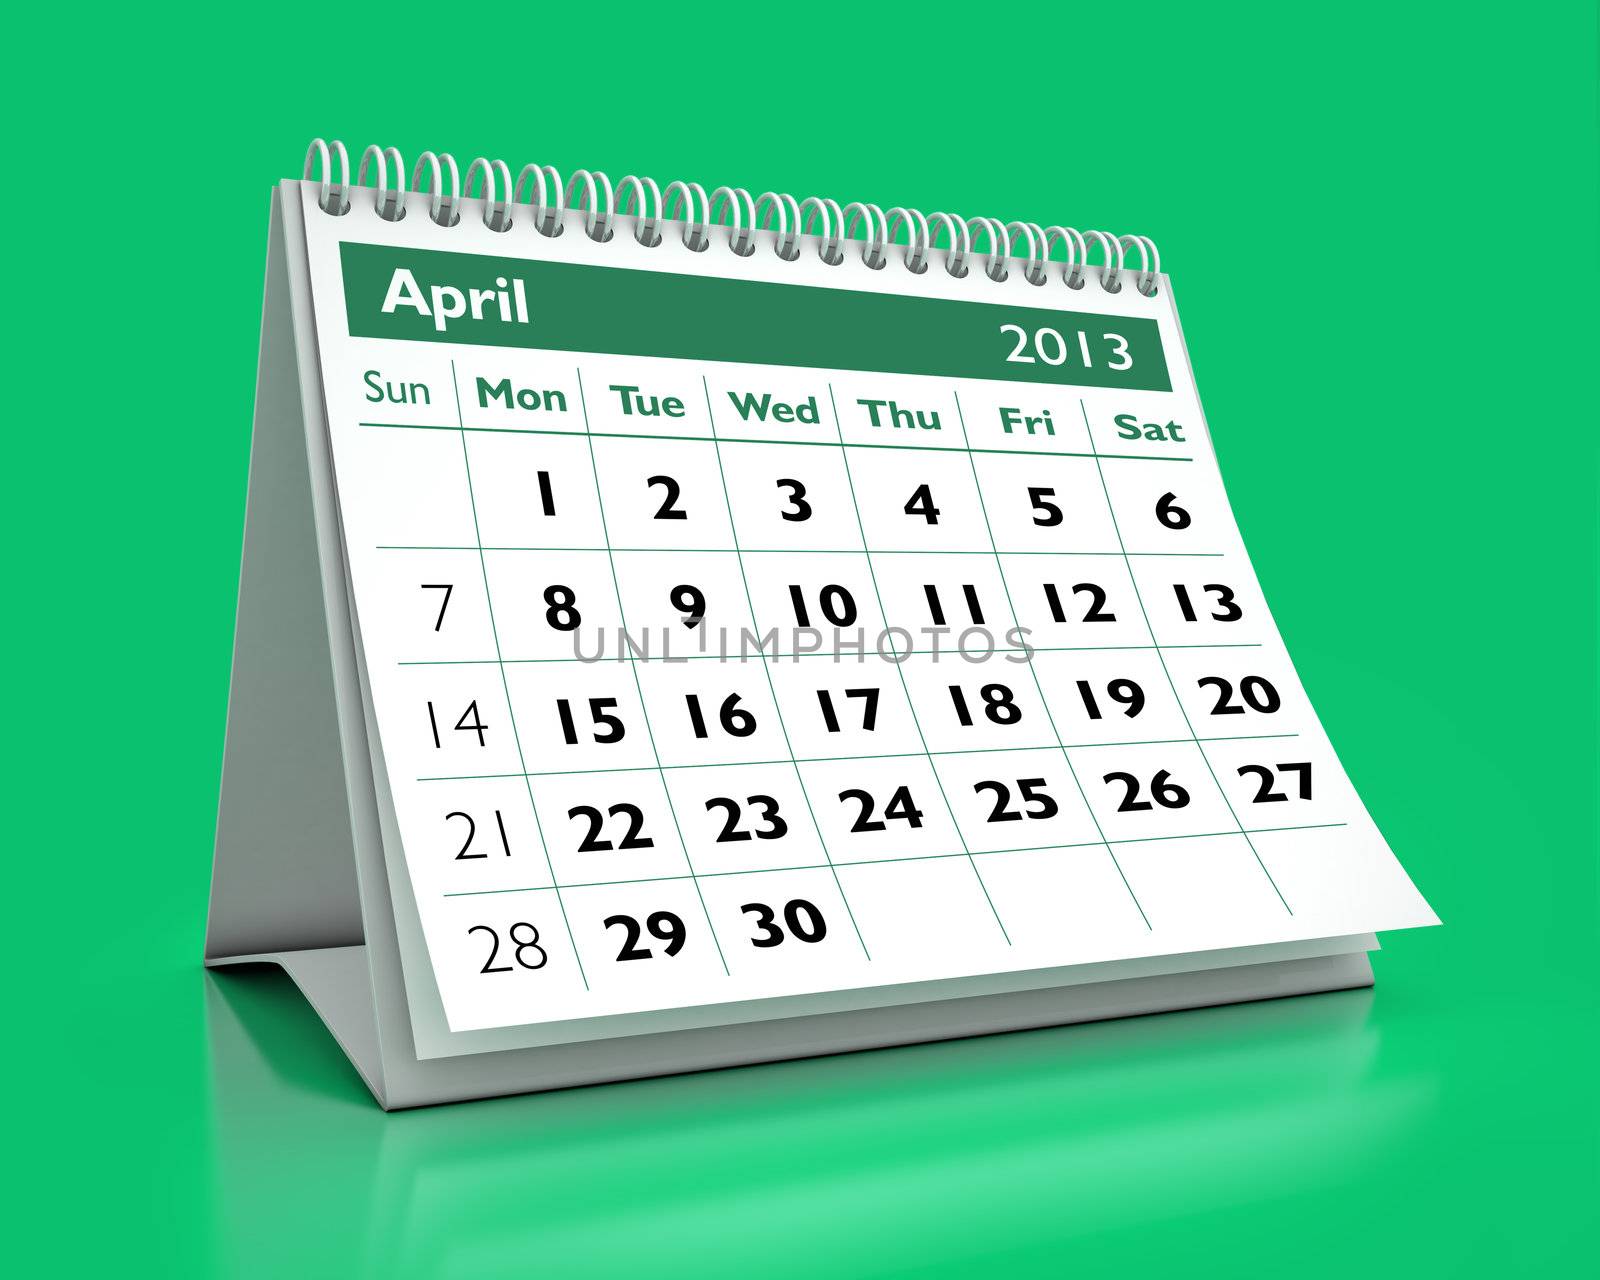 April 2013 Calendar by benjaminet